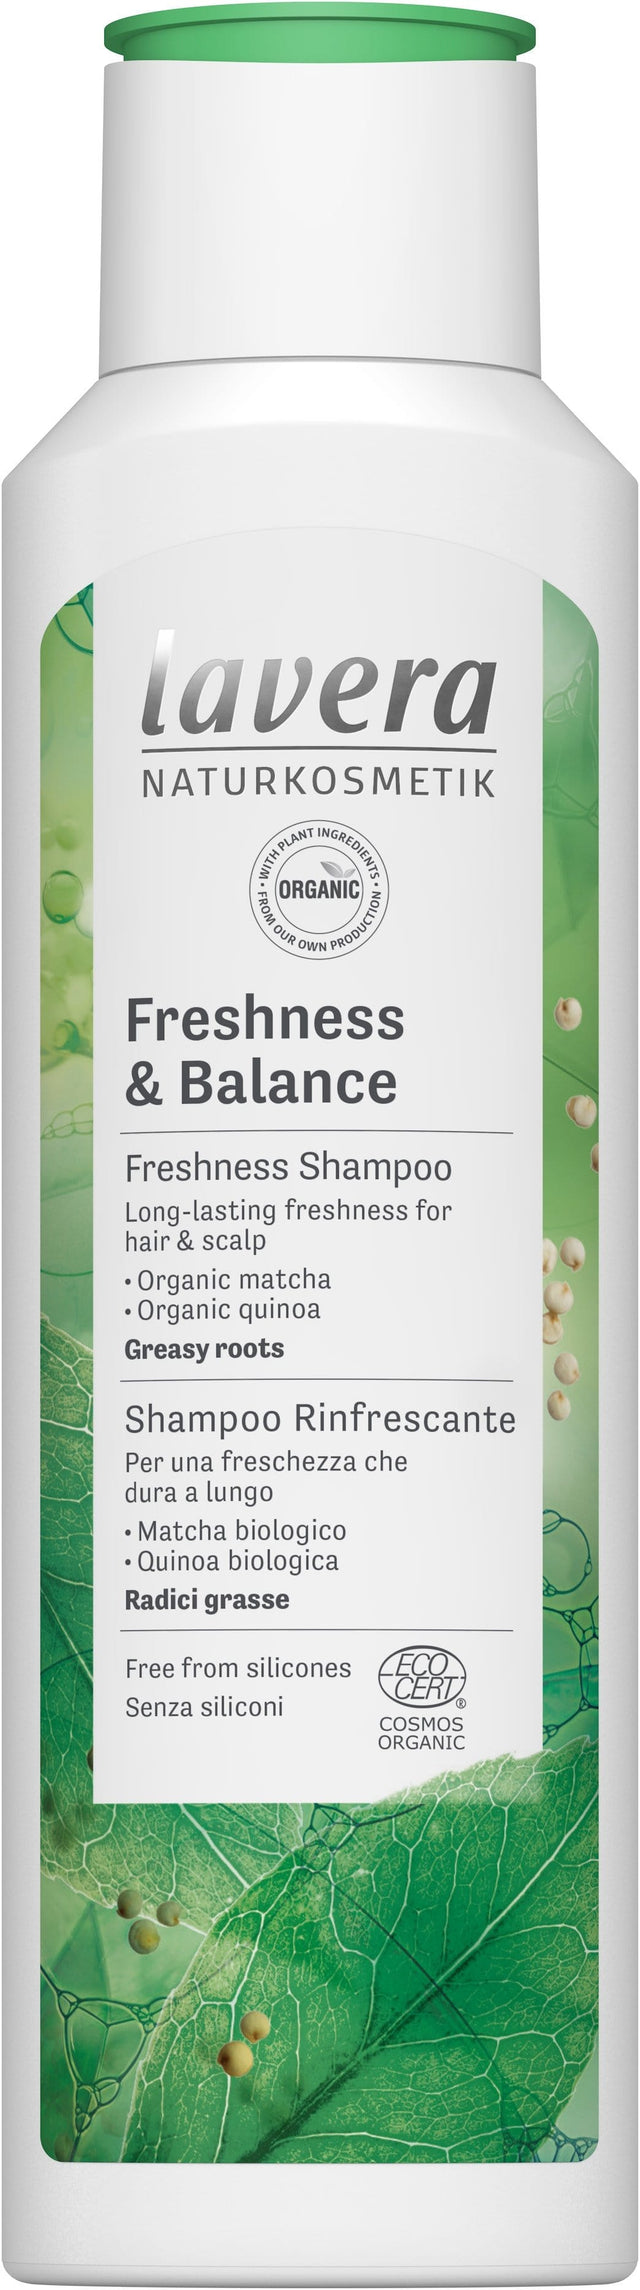 Lavera Freshness & Balance Shampoo, 250ml